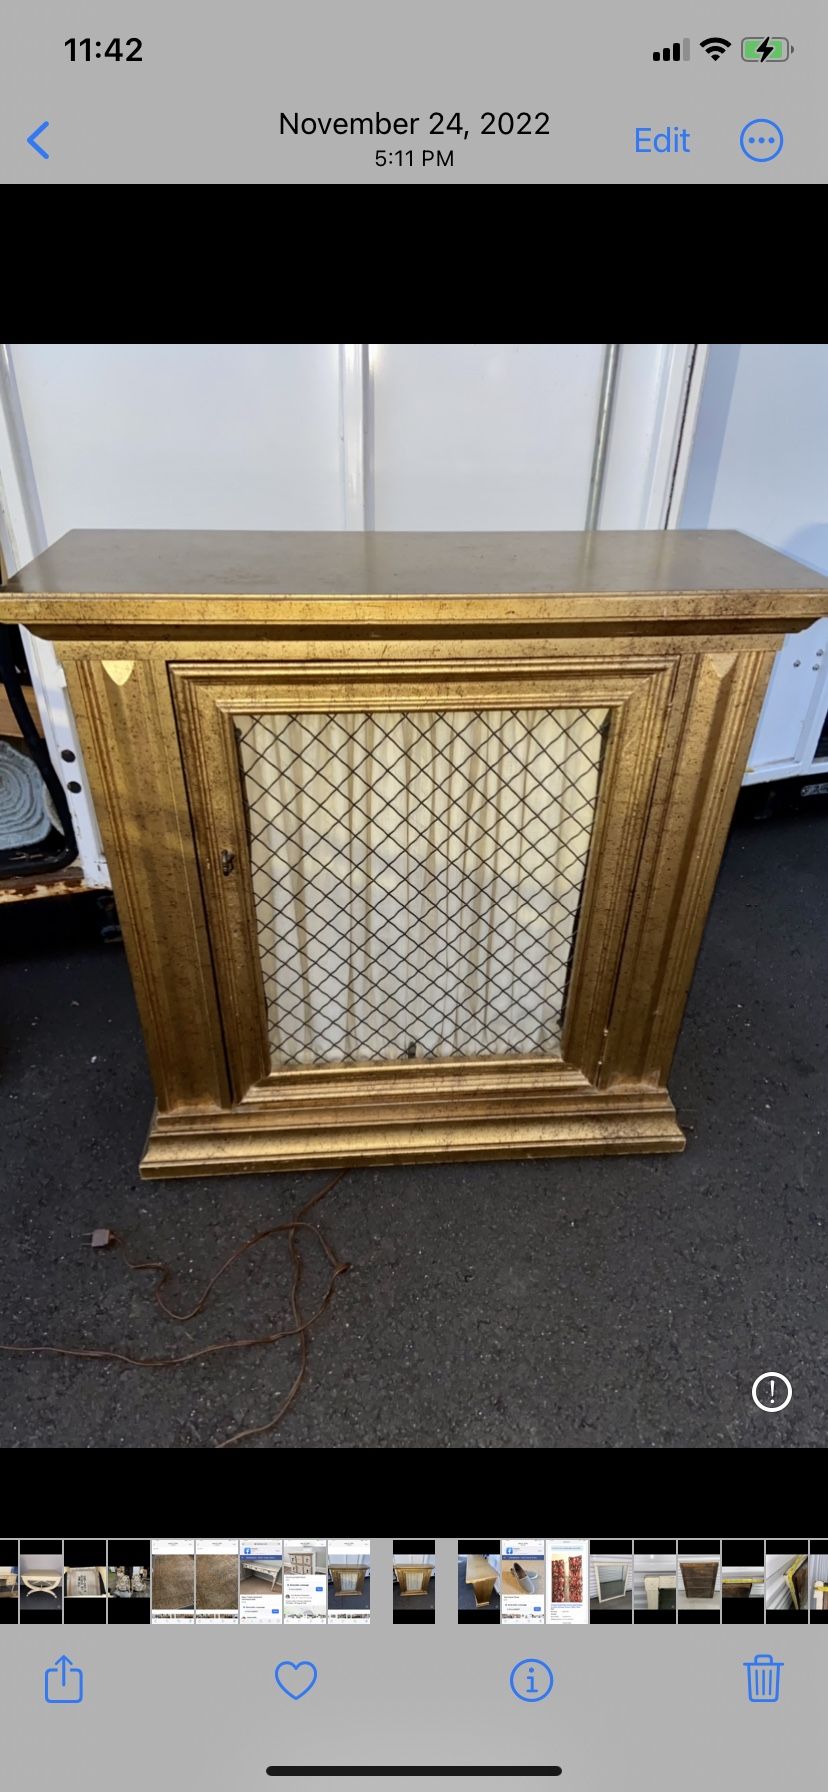 Vintage/antique gilded wood decorative/lamp cabinet 